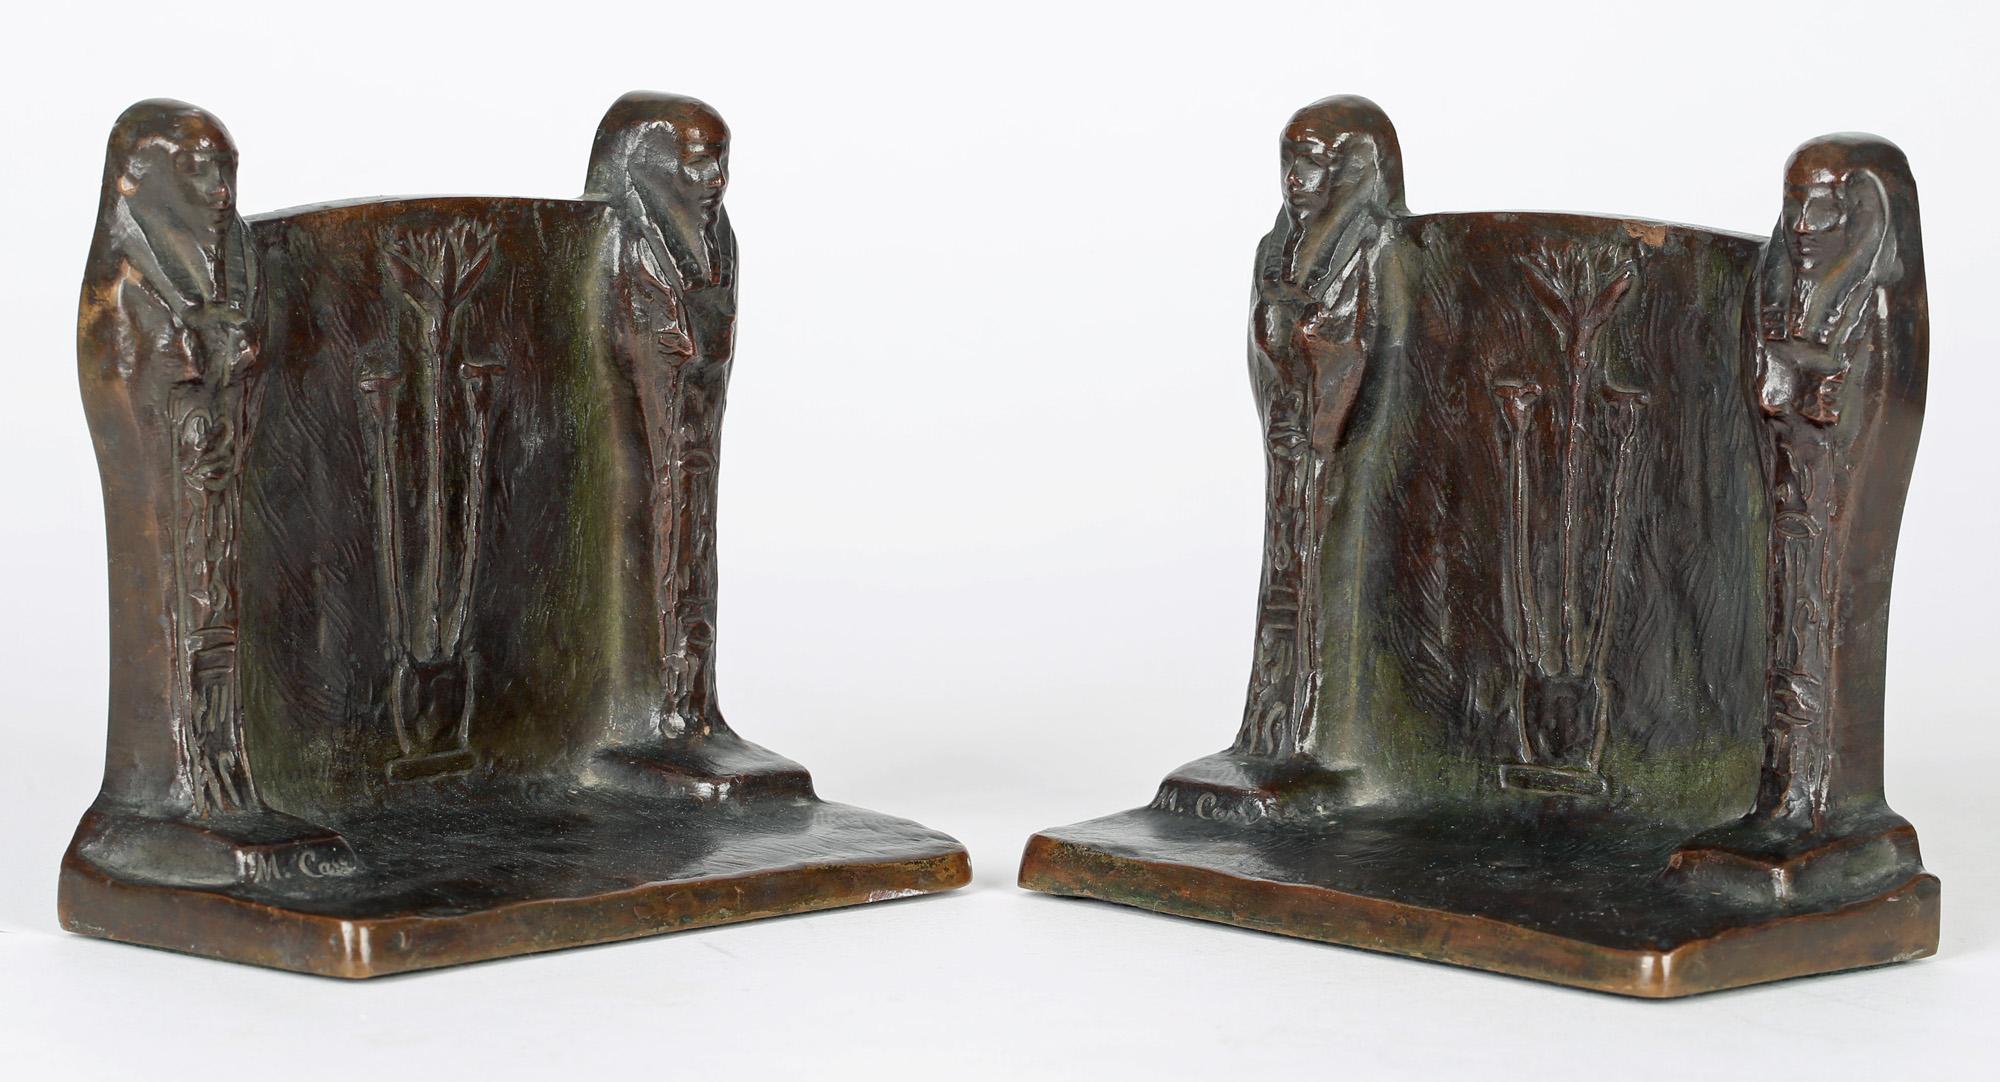 M Carr American Art Nouveau Pair Bronze Egyptian Revival Bookends For Sale 5